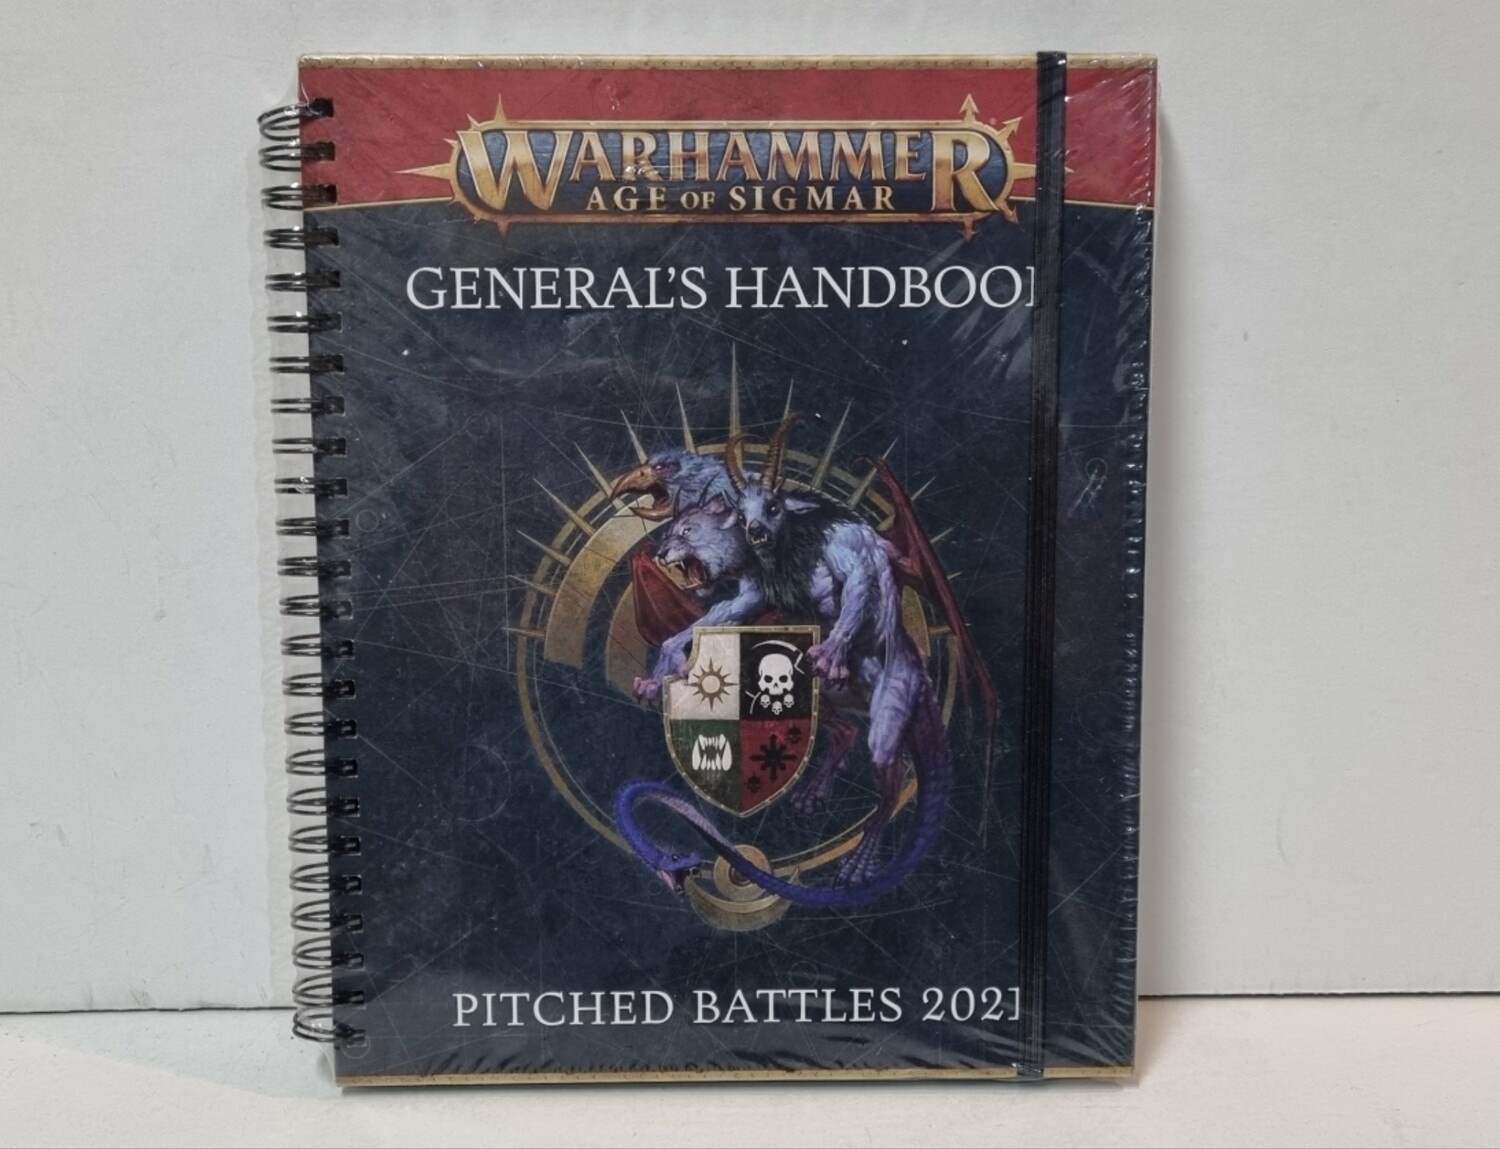 Warhammer, Age of Sigmar,  9781839064005, General's Handbook Pitched battles 2021